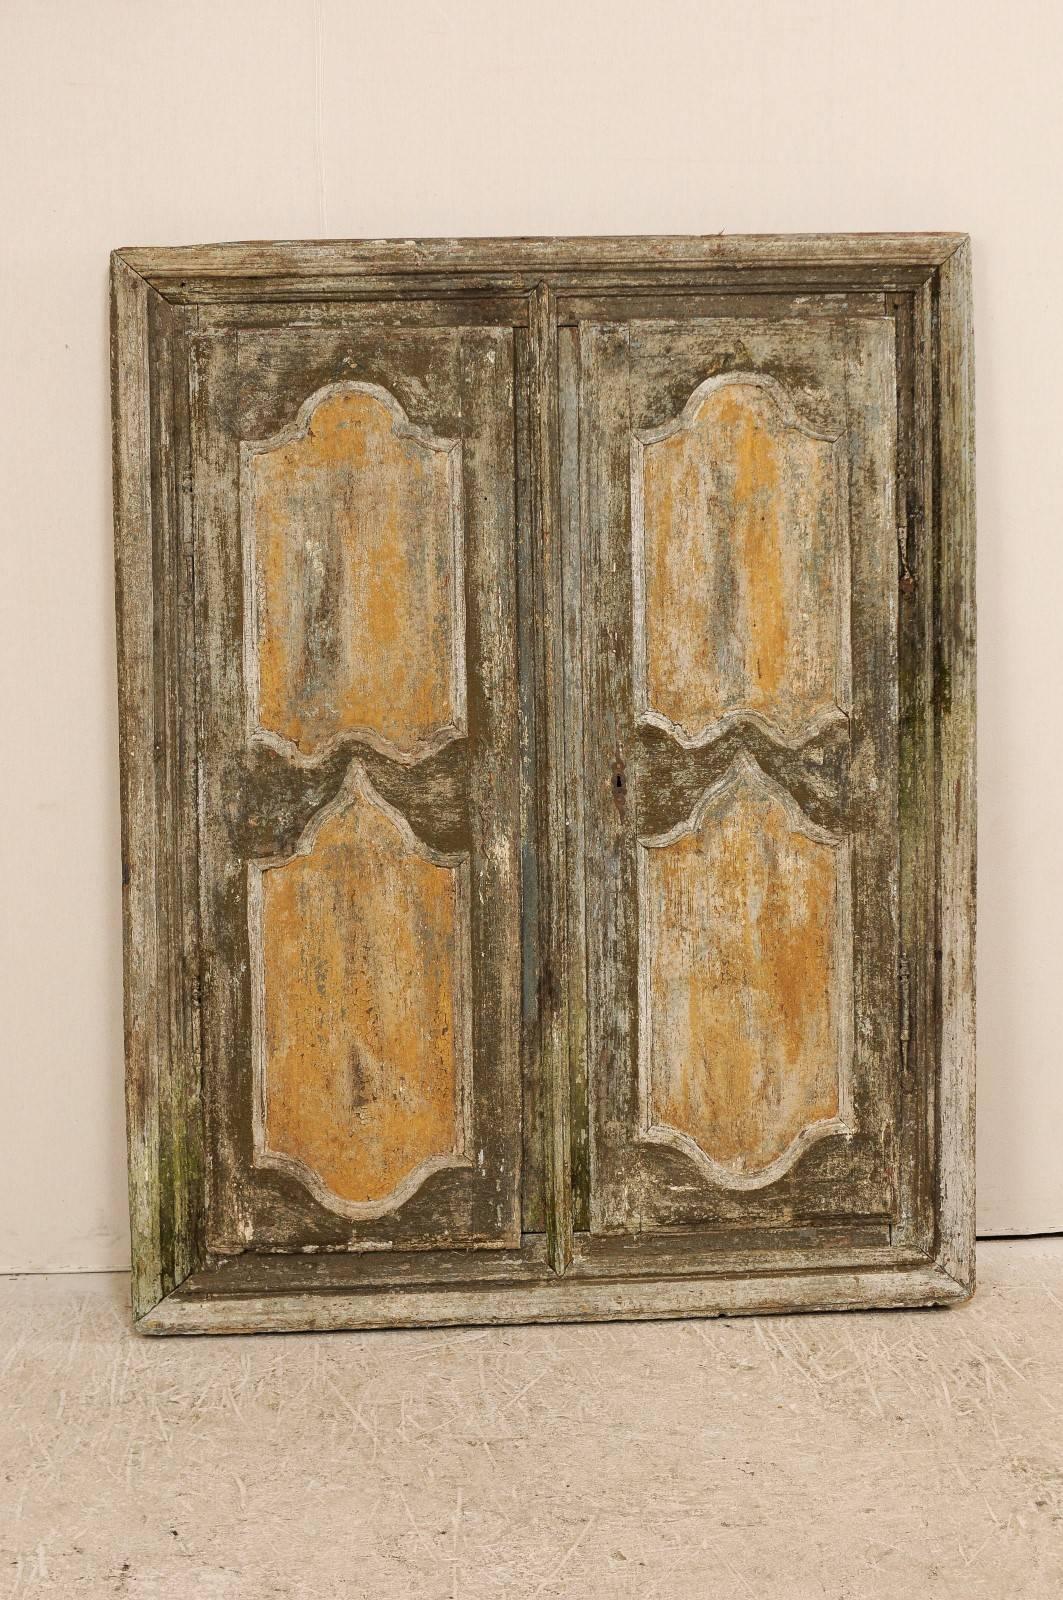 Carved Pair of Italian 18th Century Doors in Original Casing with Grey and Beige Tones